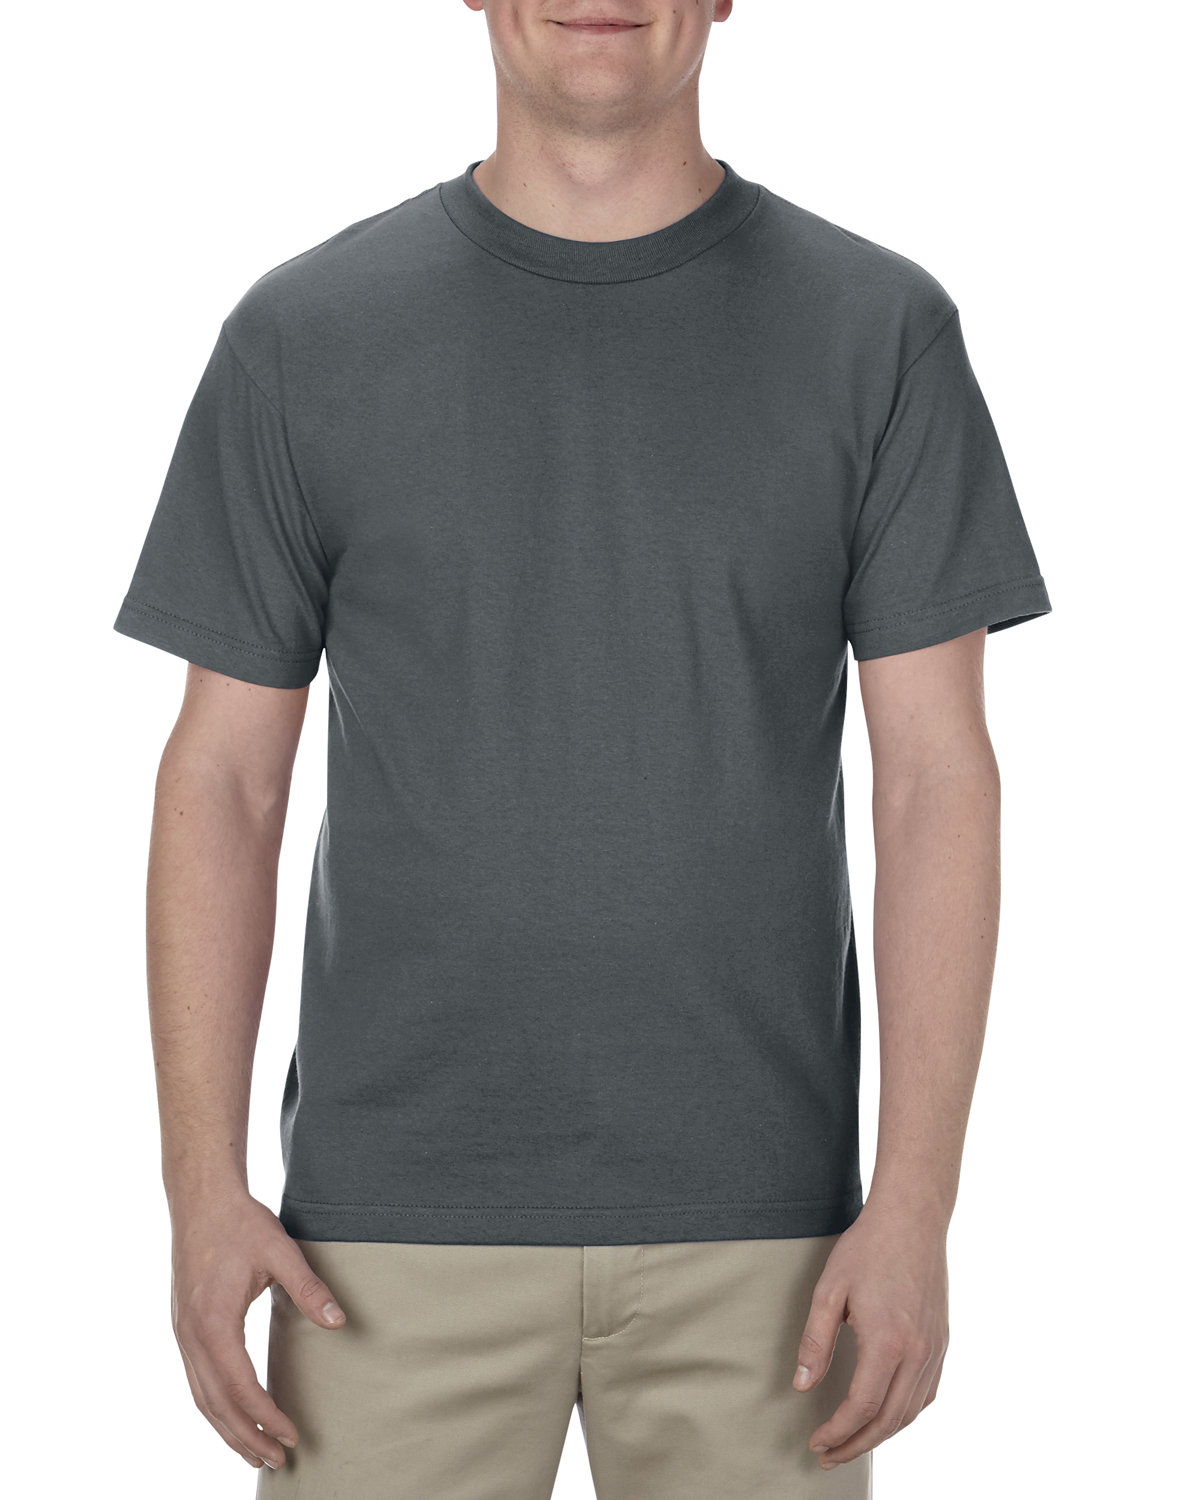 Alstyle Adult 6.0 oz., 100% Cotton T-Shirt CHARCOAL 